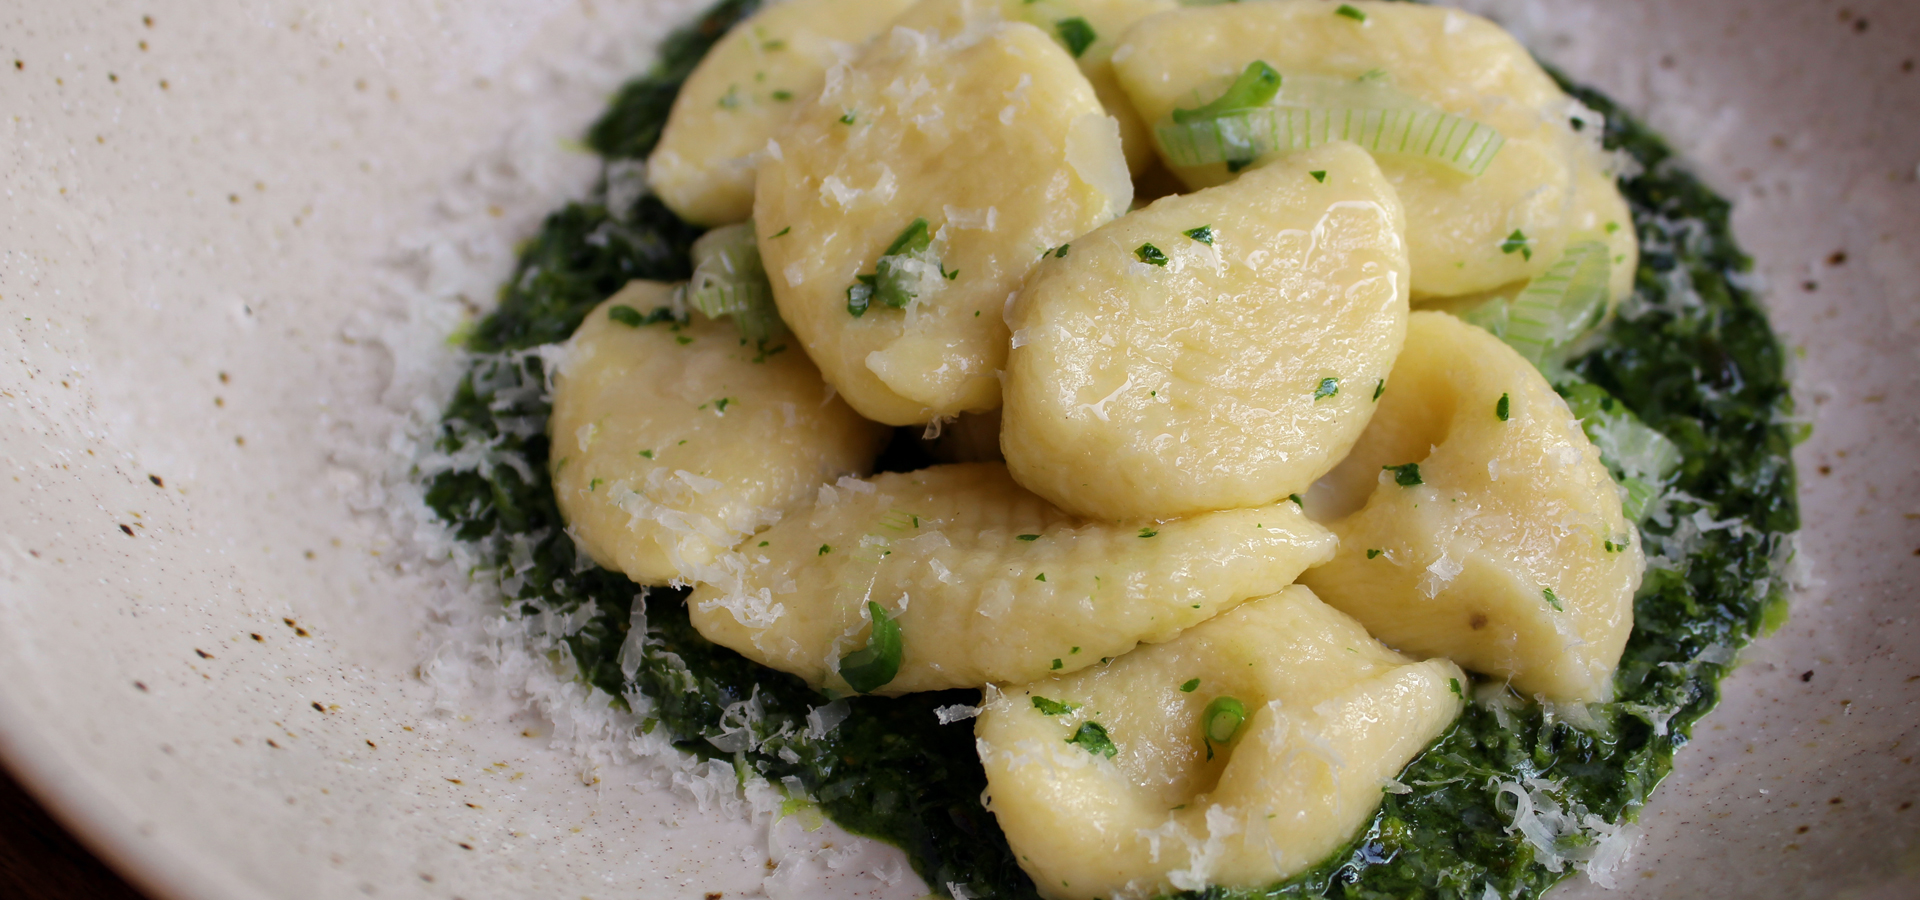 Potato Gnocchi with Kale and Pistachio Pesto and Spring Onions